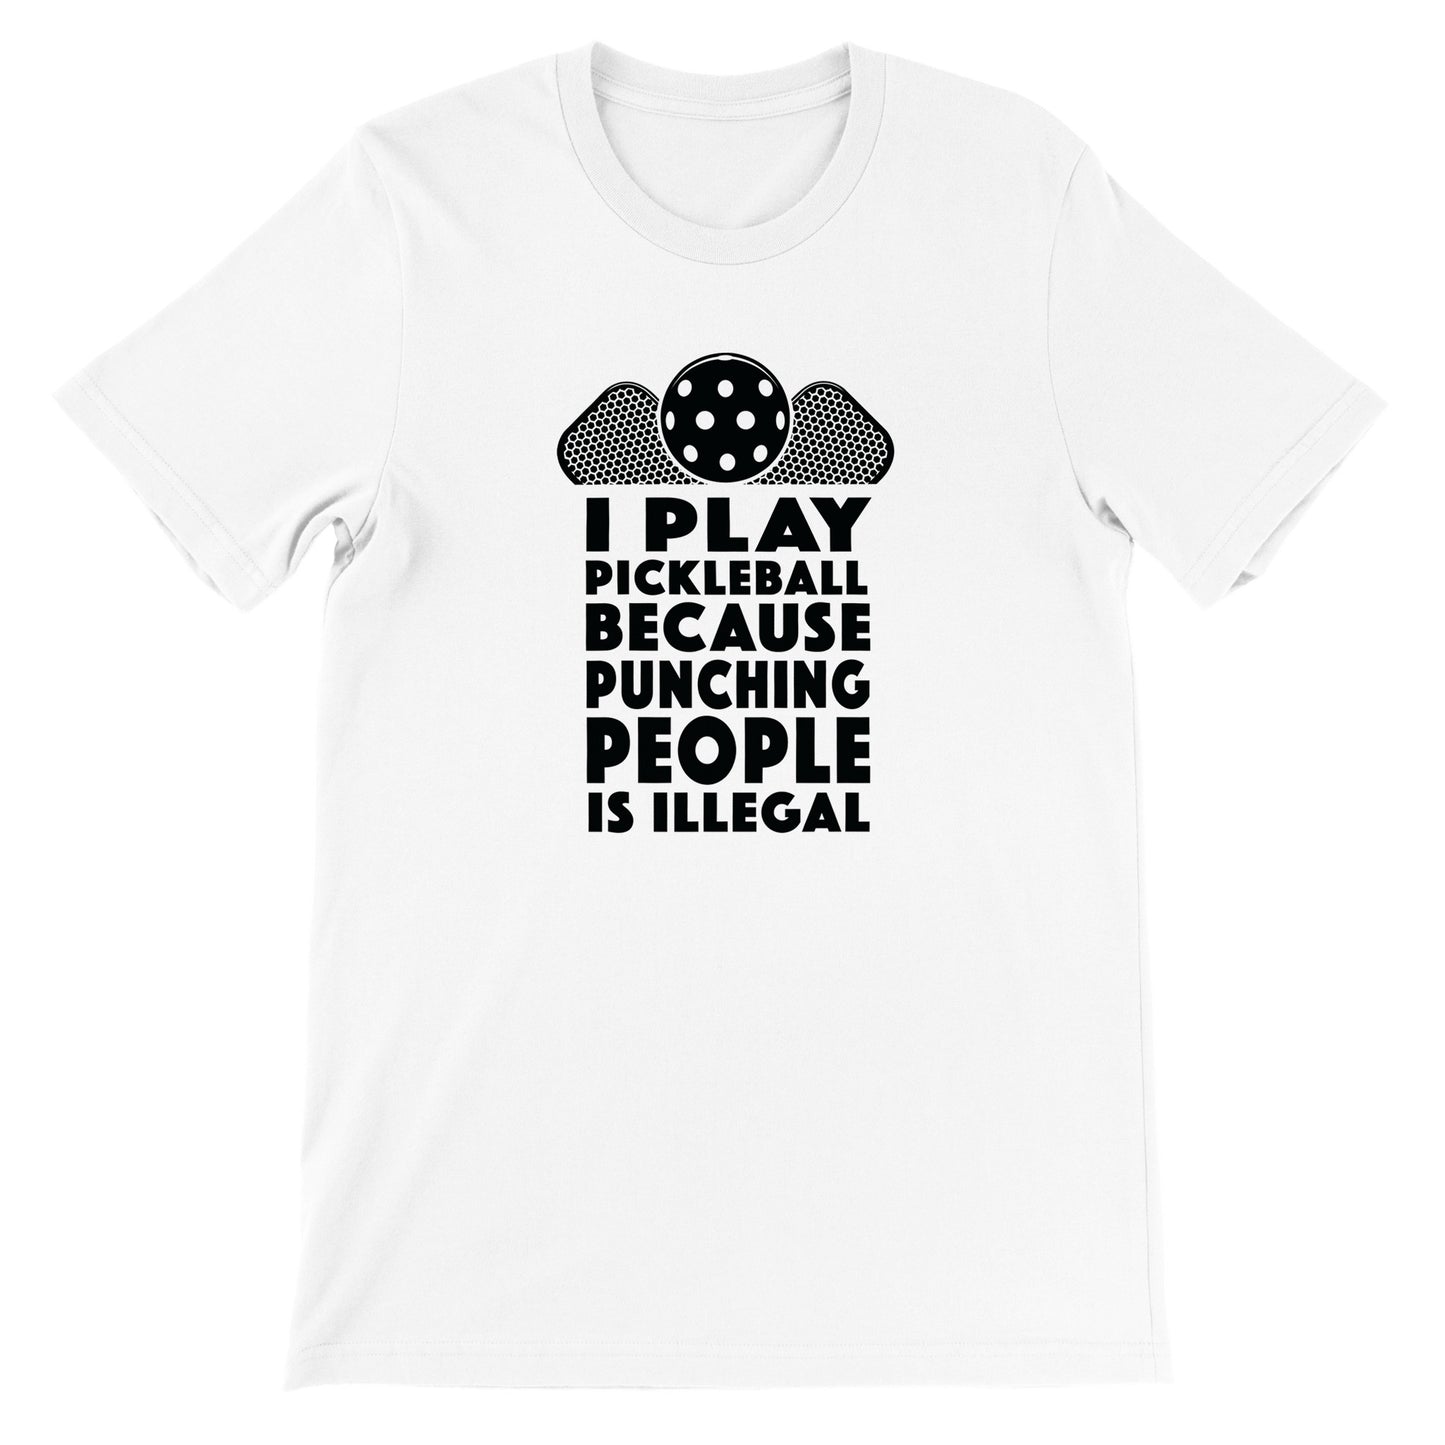 I PLAY PICKLEBALL